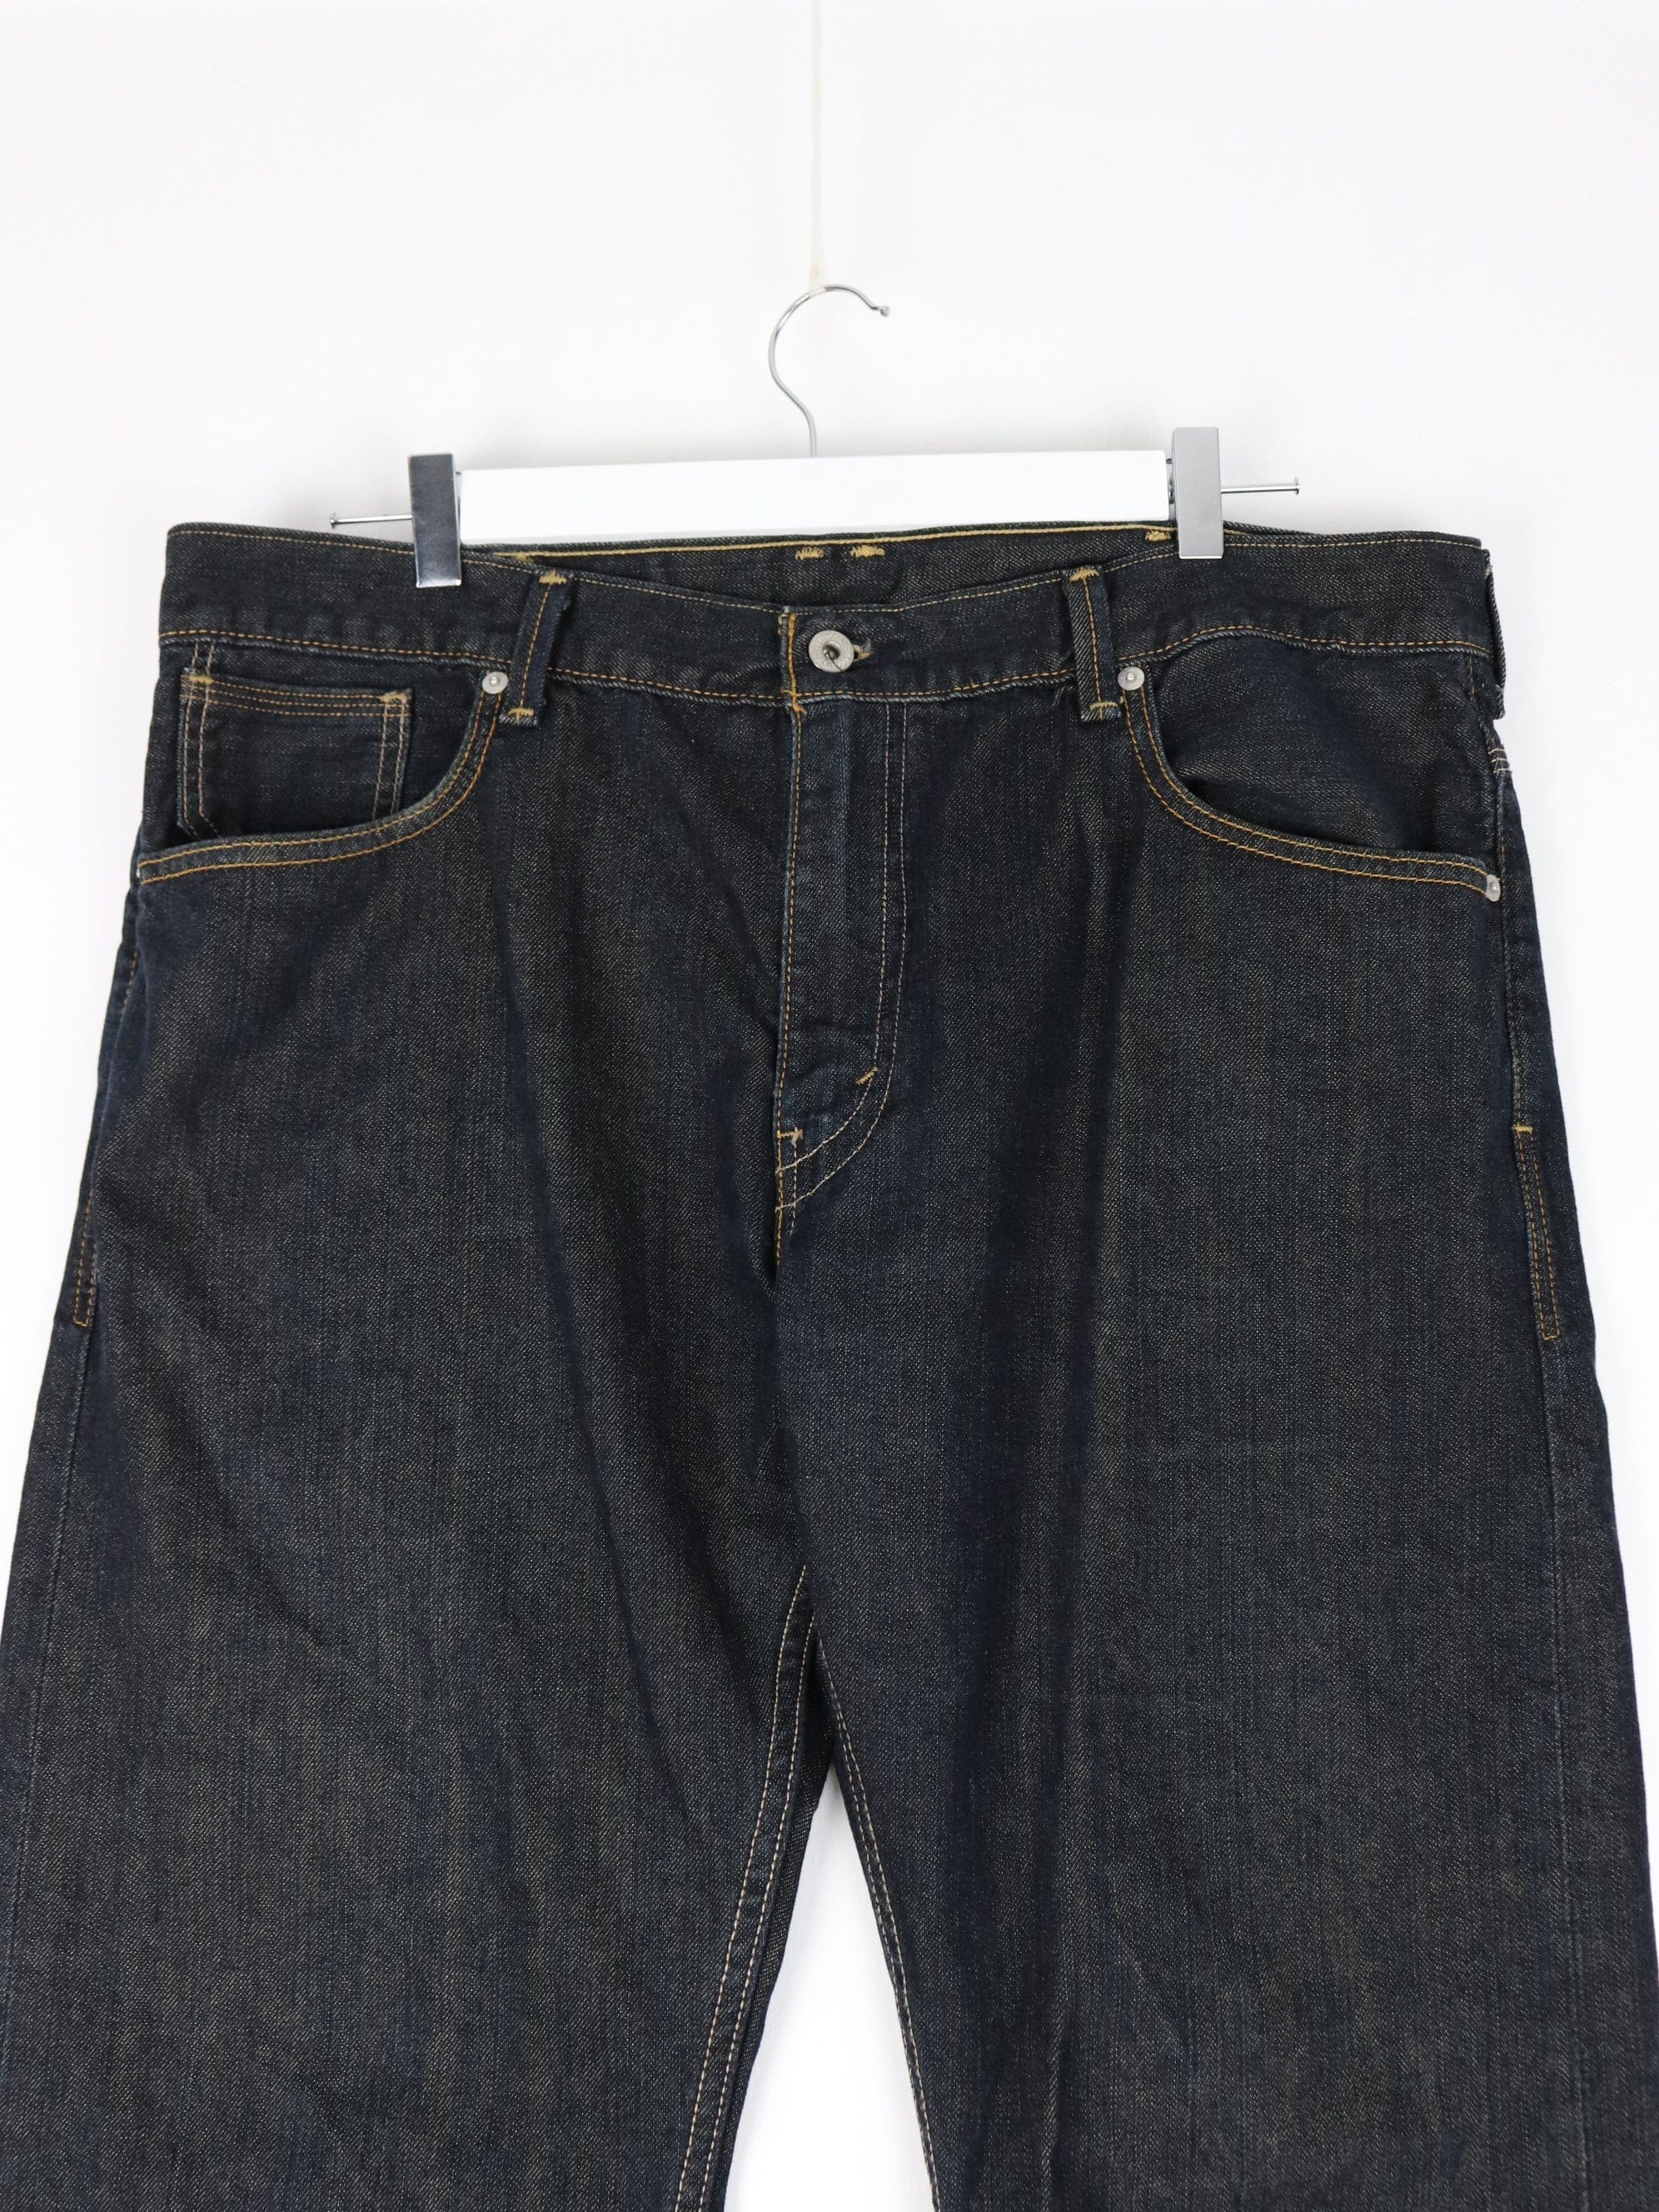 Levi's Pants Fits Mens 38 x 34 Blue Denim Jeans 514 Slim Straight